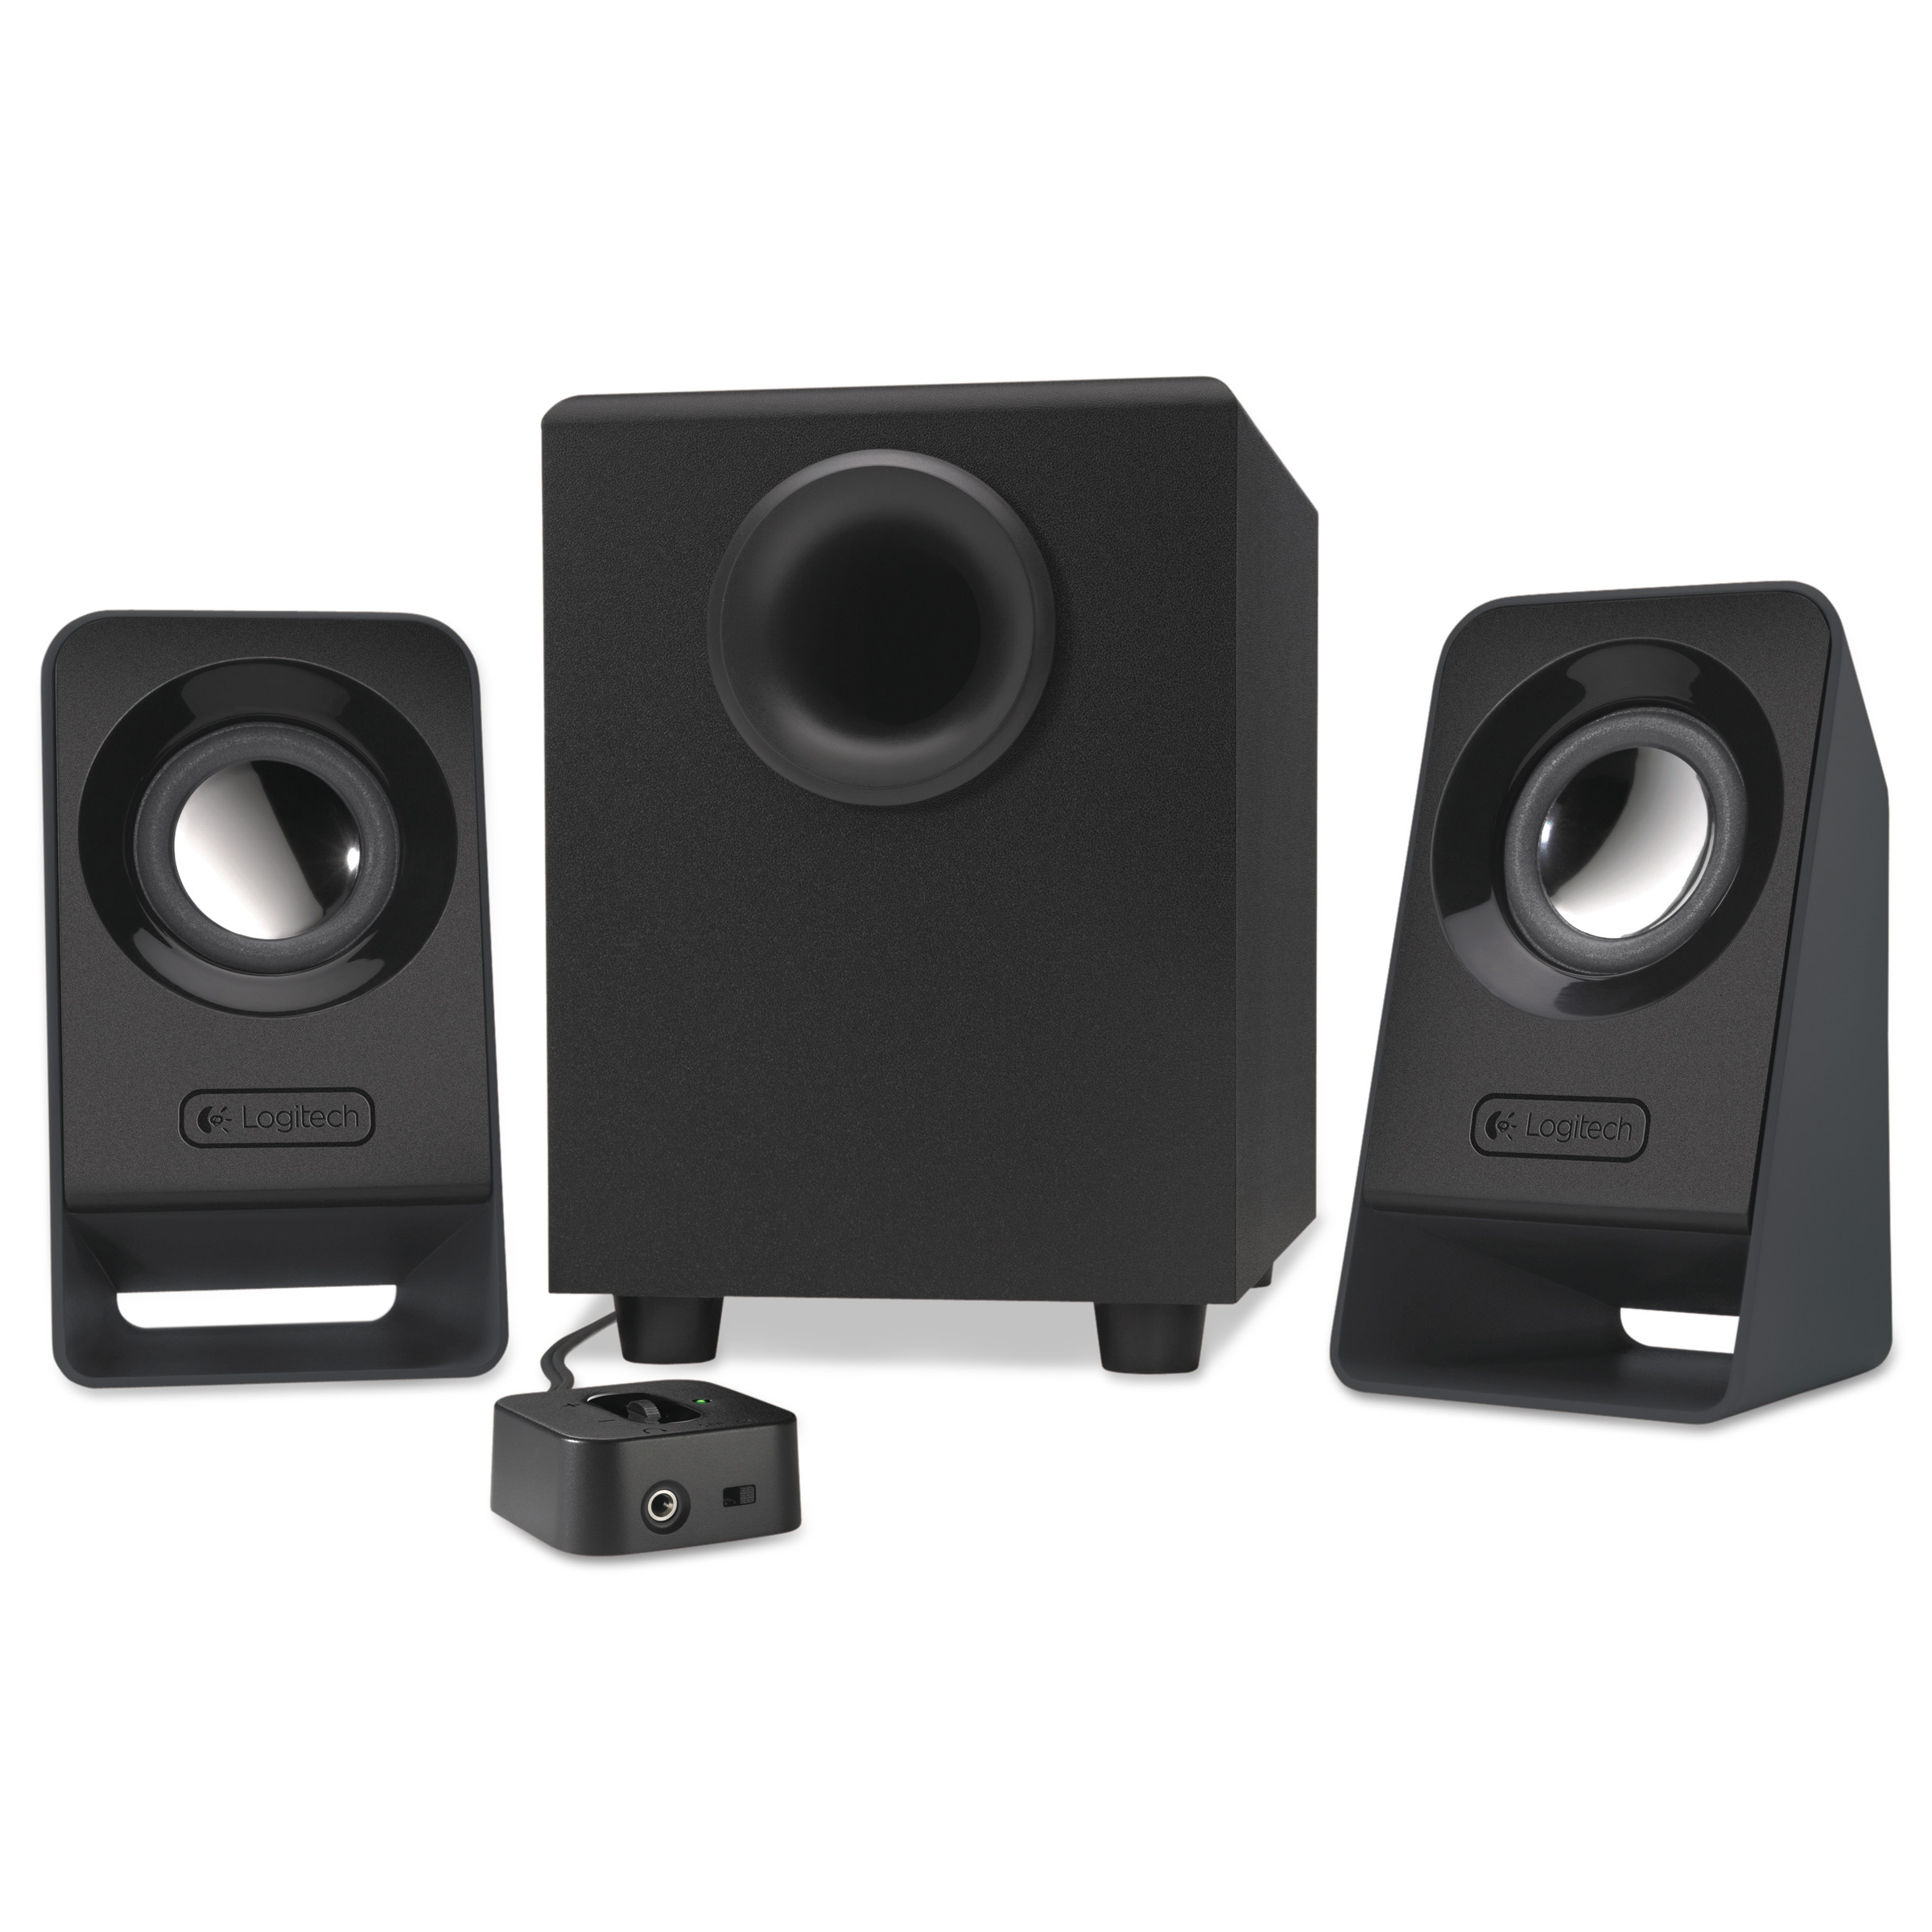 Logitech Z213 Multimedia Speakers, Black - image 1 of 5